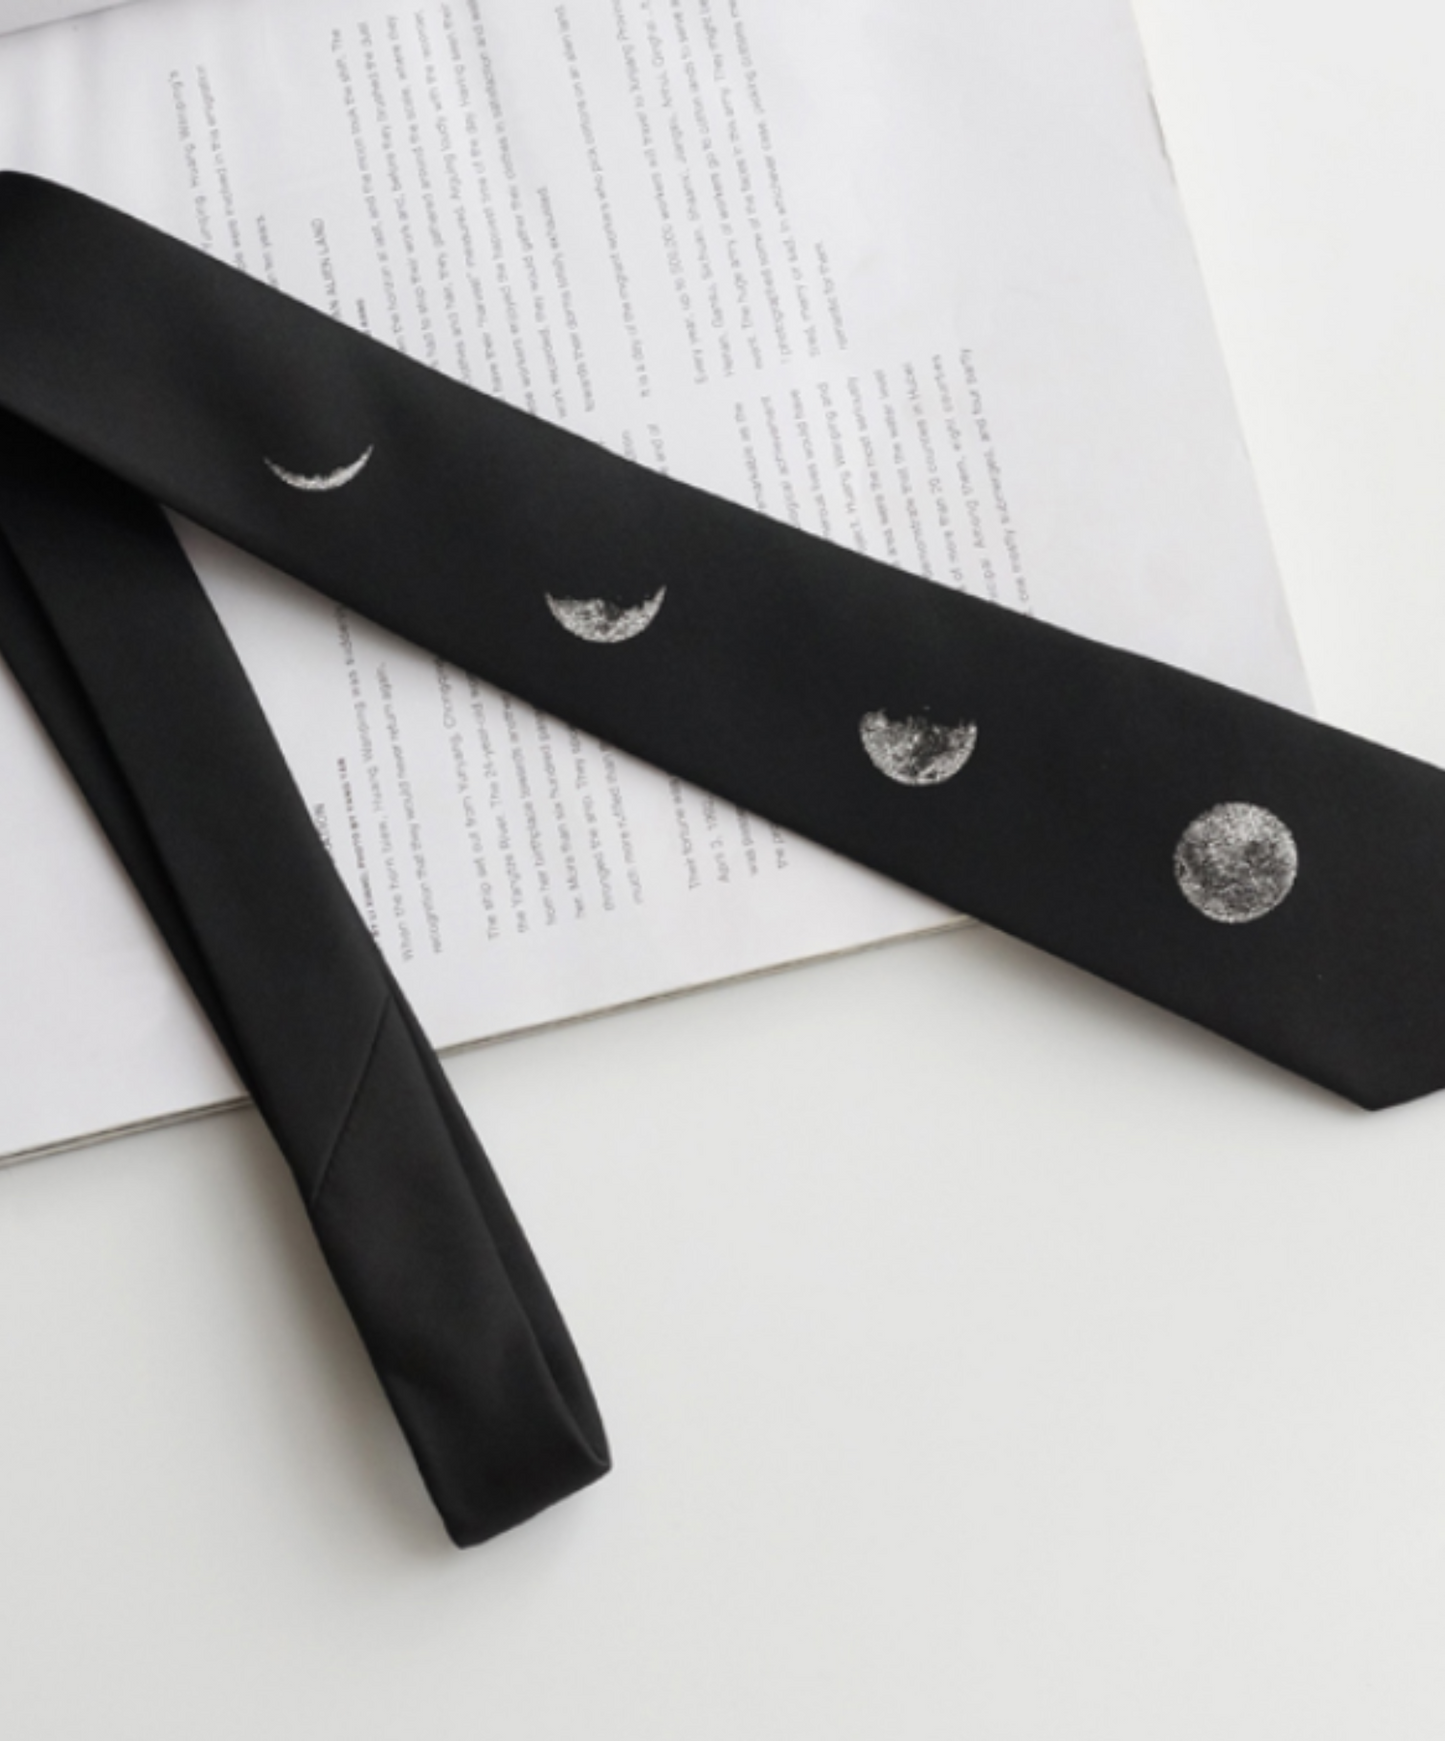 lunar eclipse design necktie EN873